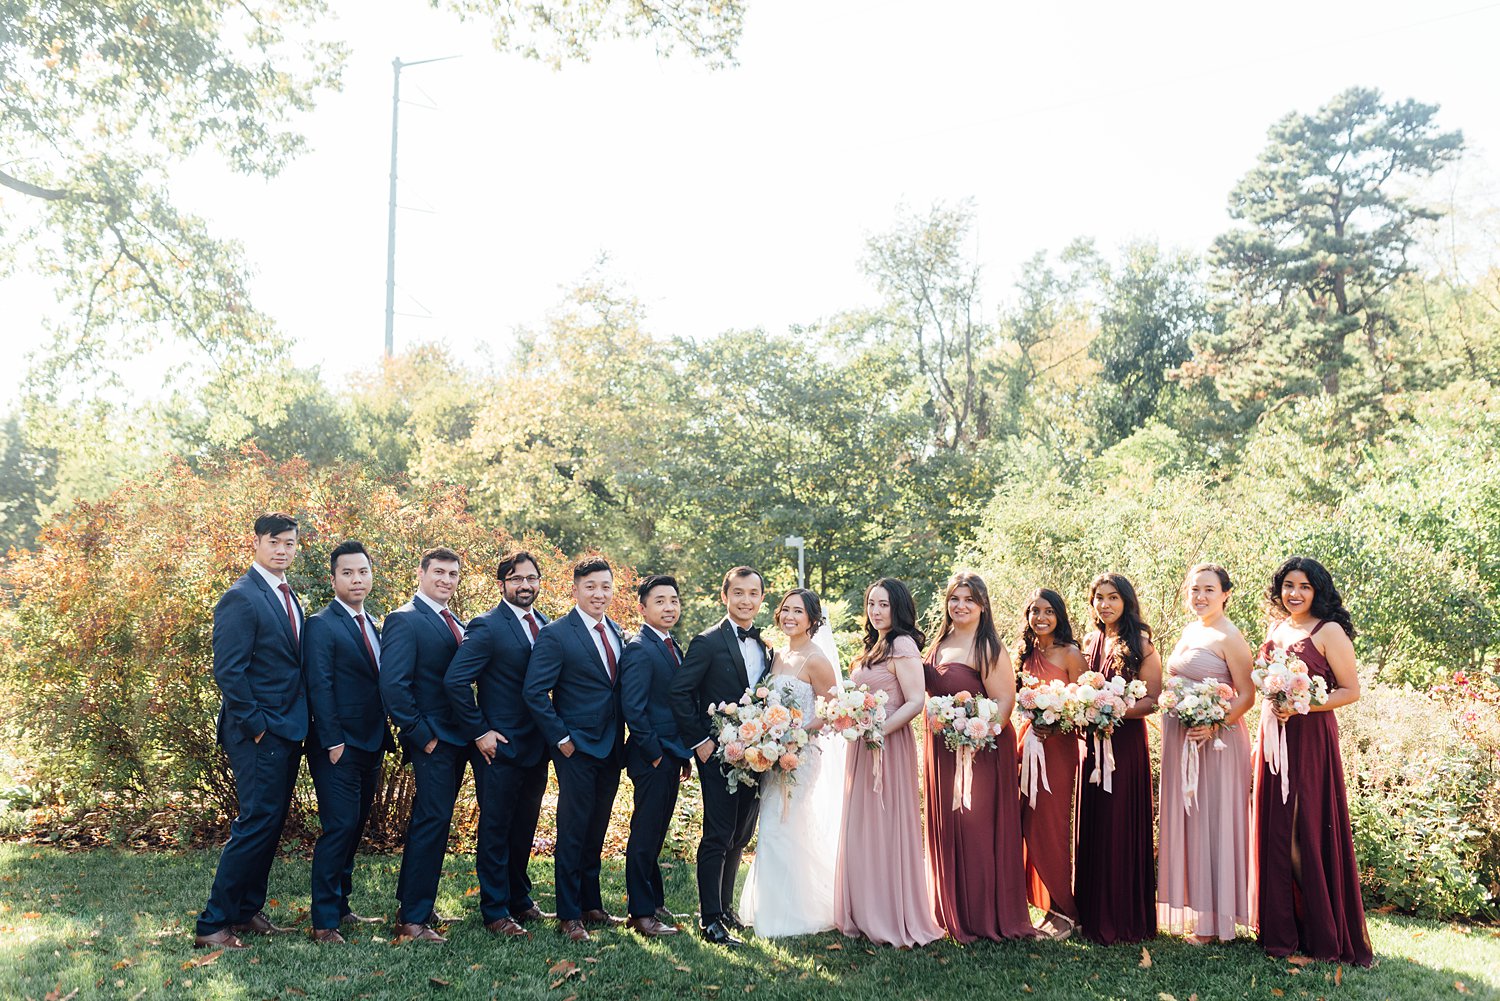 Aelita + George - Bartram's Garden Wedding - Philadelphia Family Photographer - Alison Dunn Photography photo